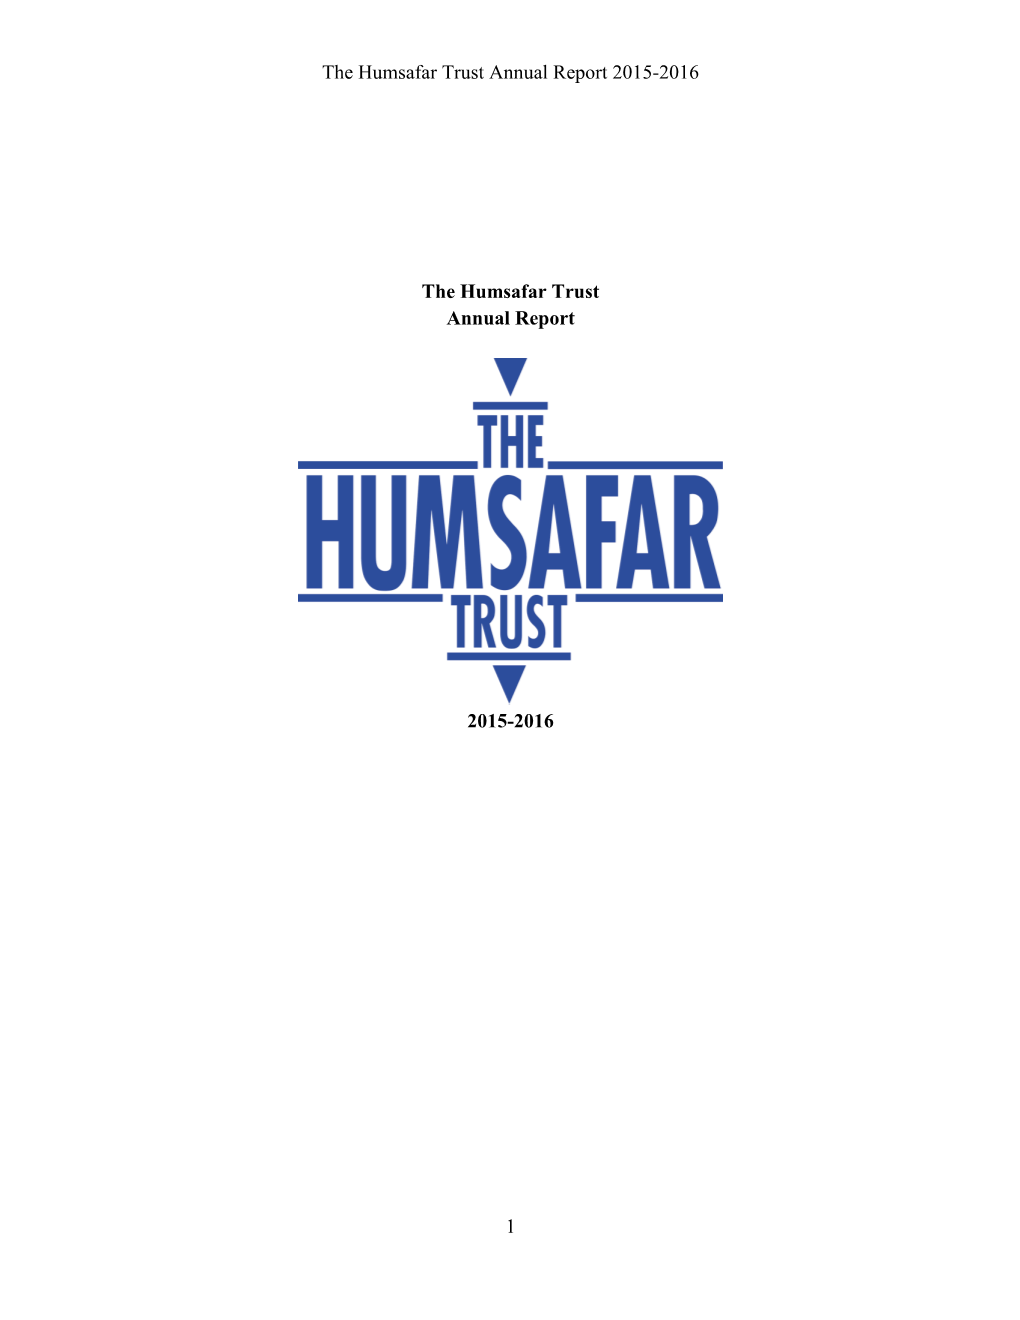 Humsafar Trust Annual Report 2015-2016